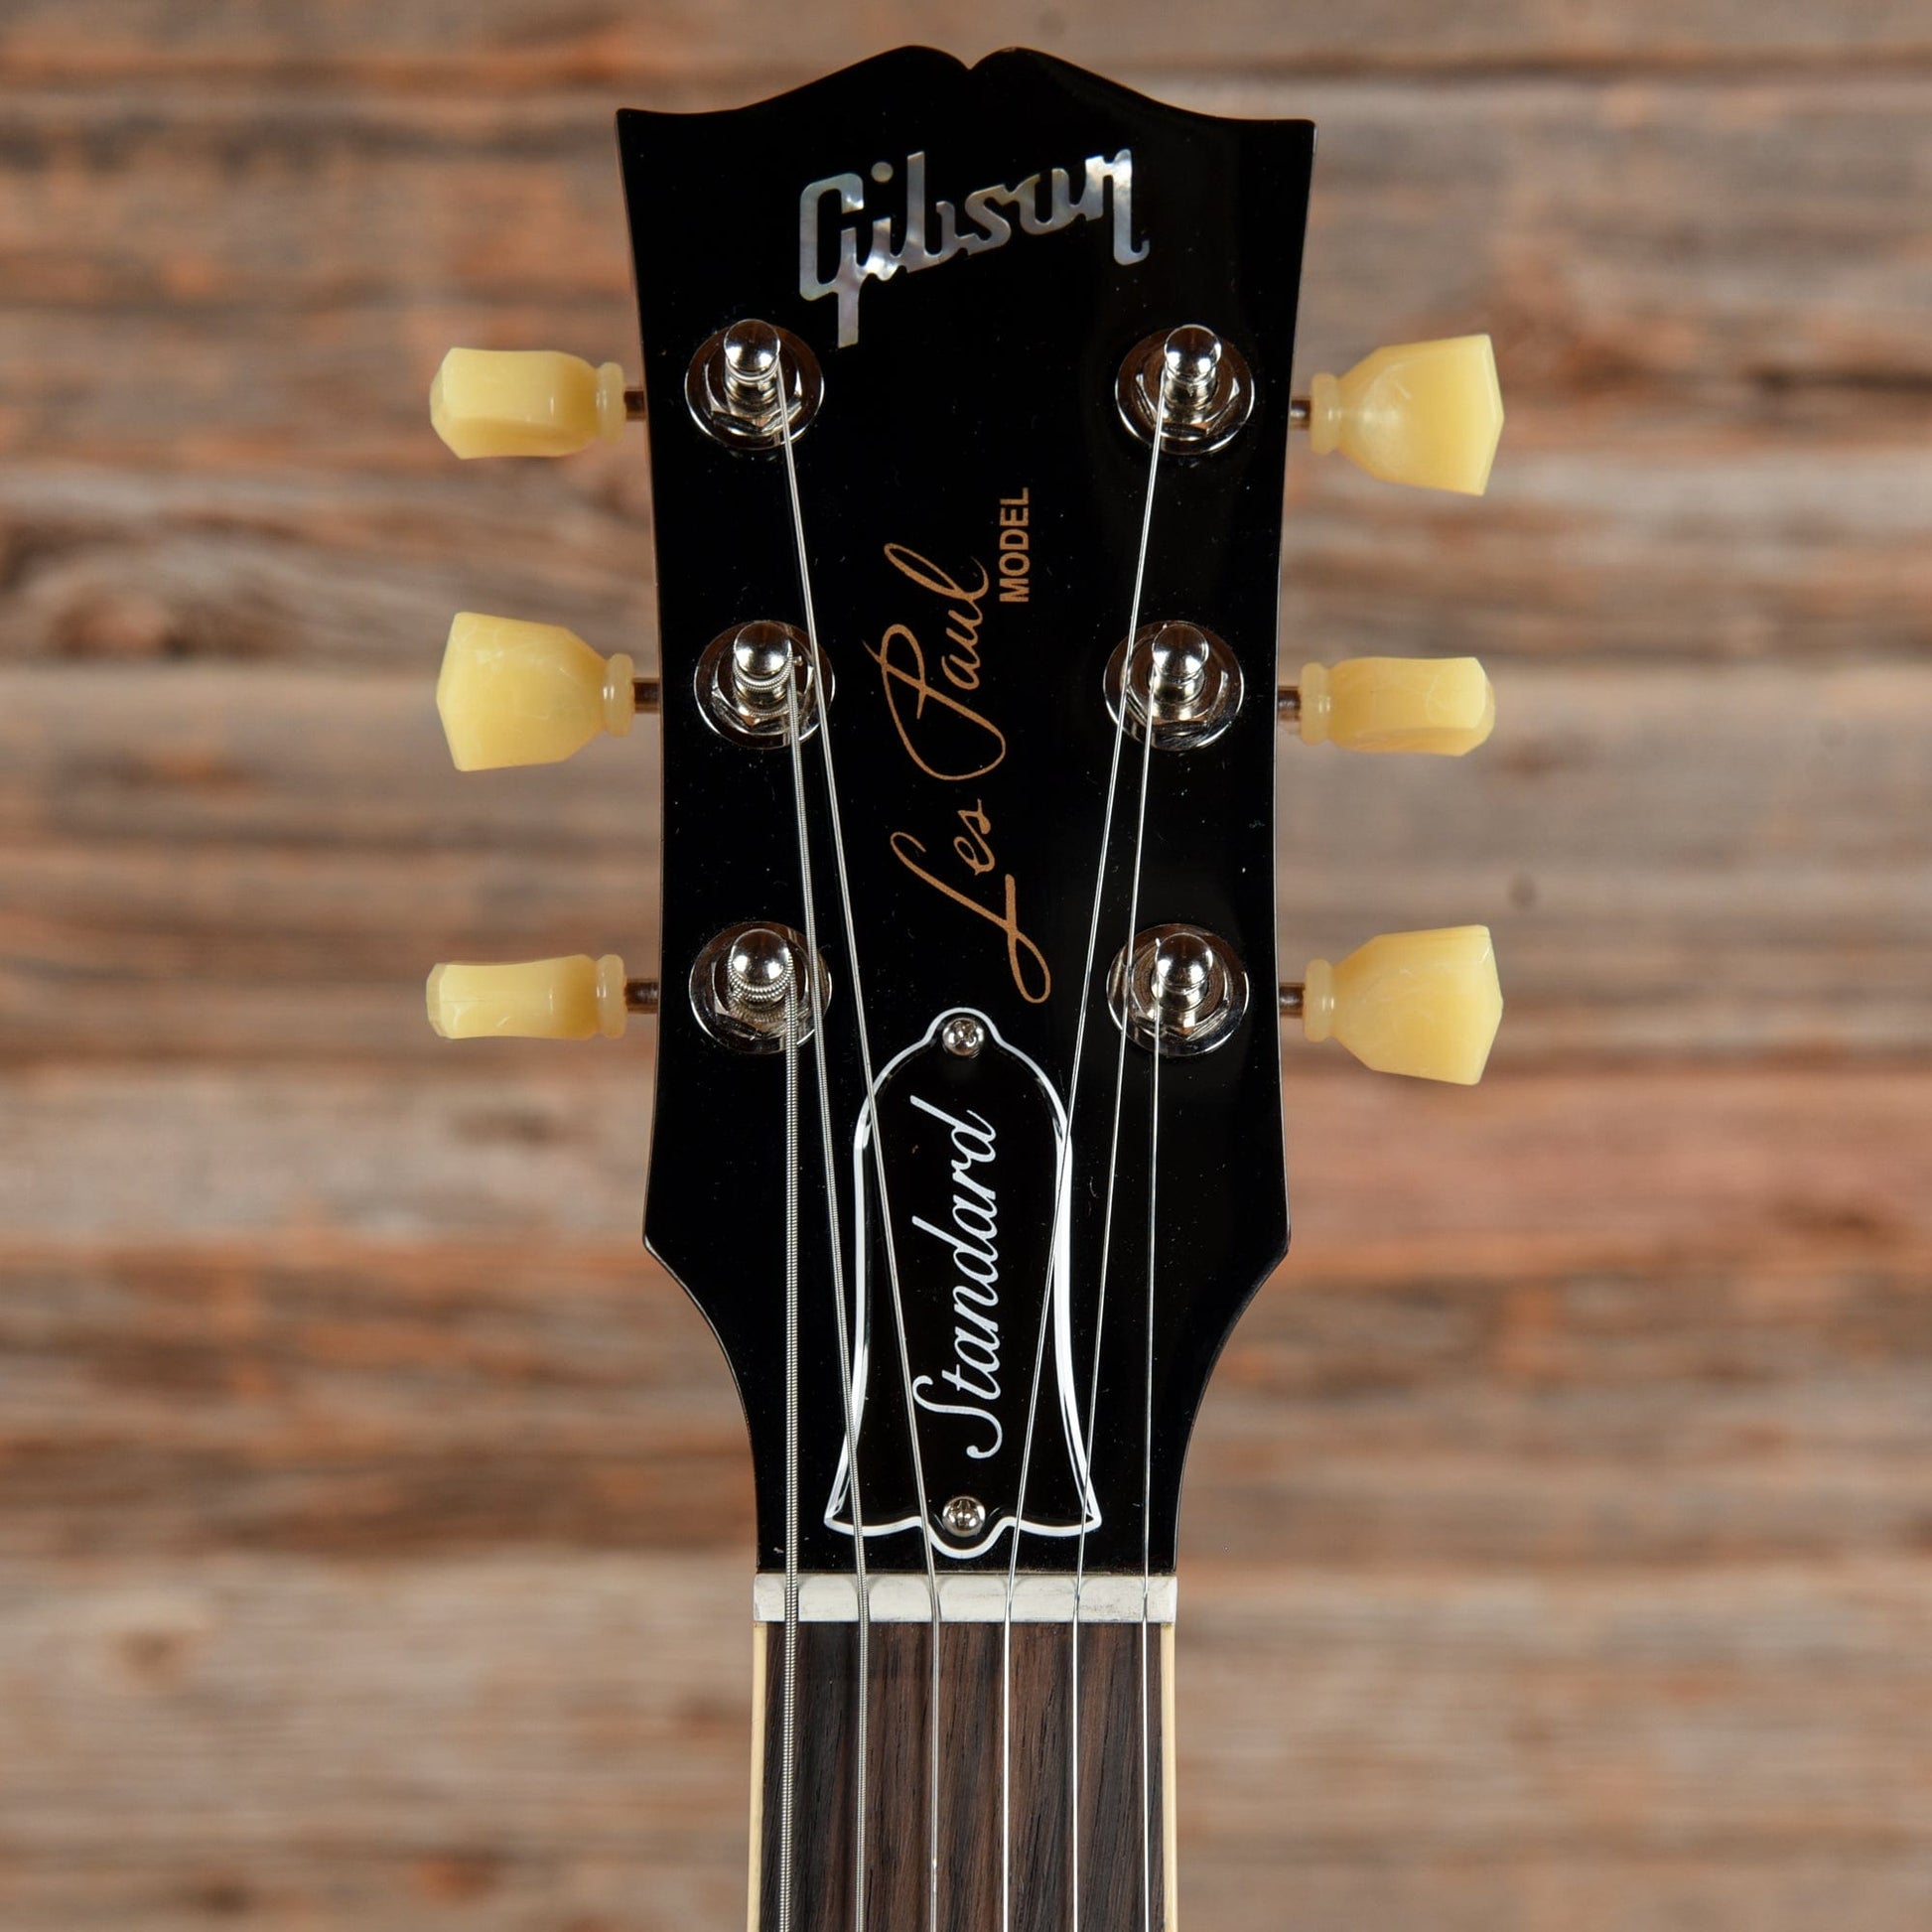 Gibson Les Paul Standard '60s Cherry Sunburst 2019 Electric Guitars / Solid Body